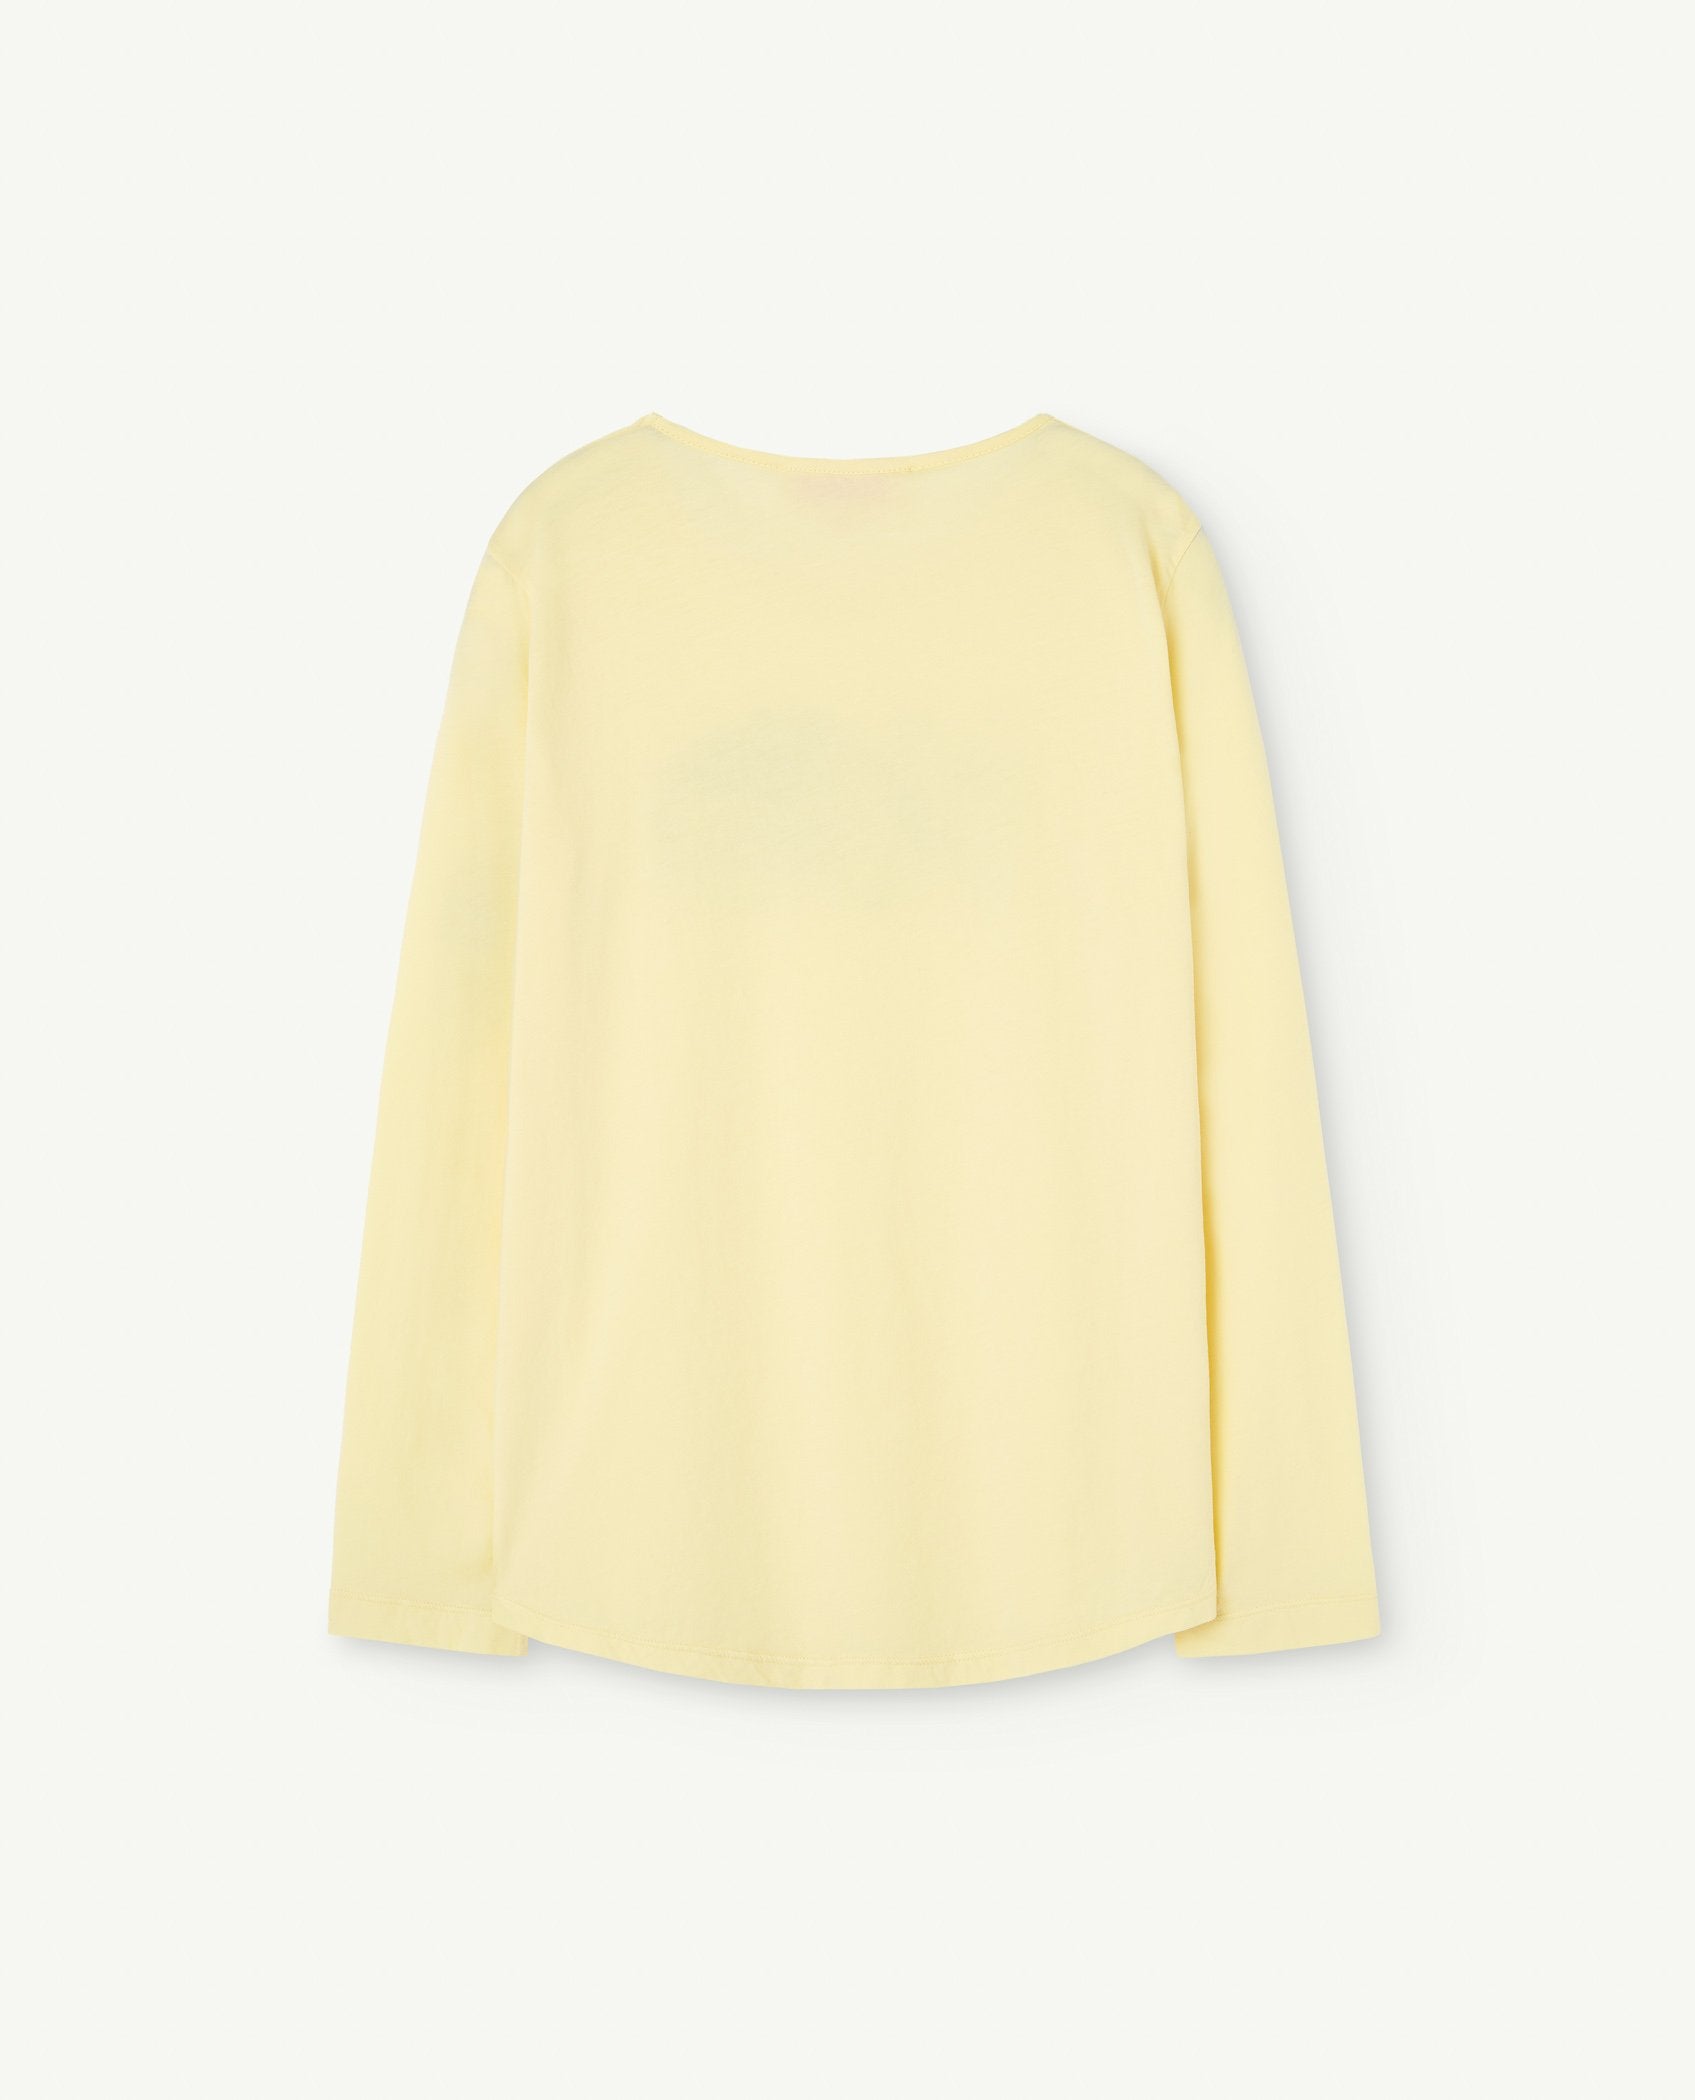 Soft Yellow Cricket Long Sleeve T-Shirt PRODUCT BACK